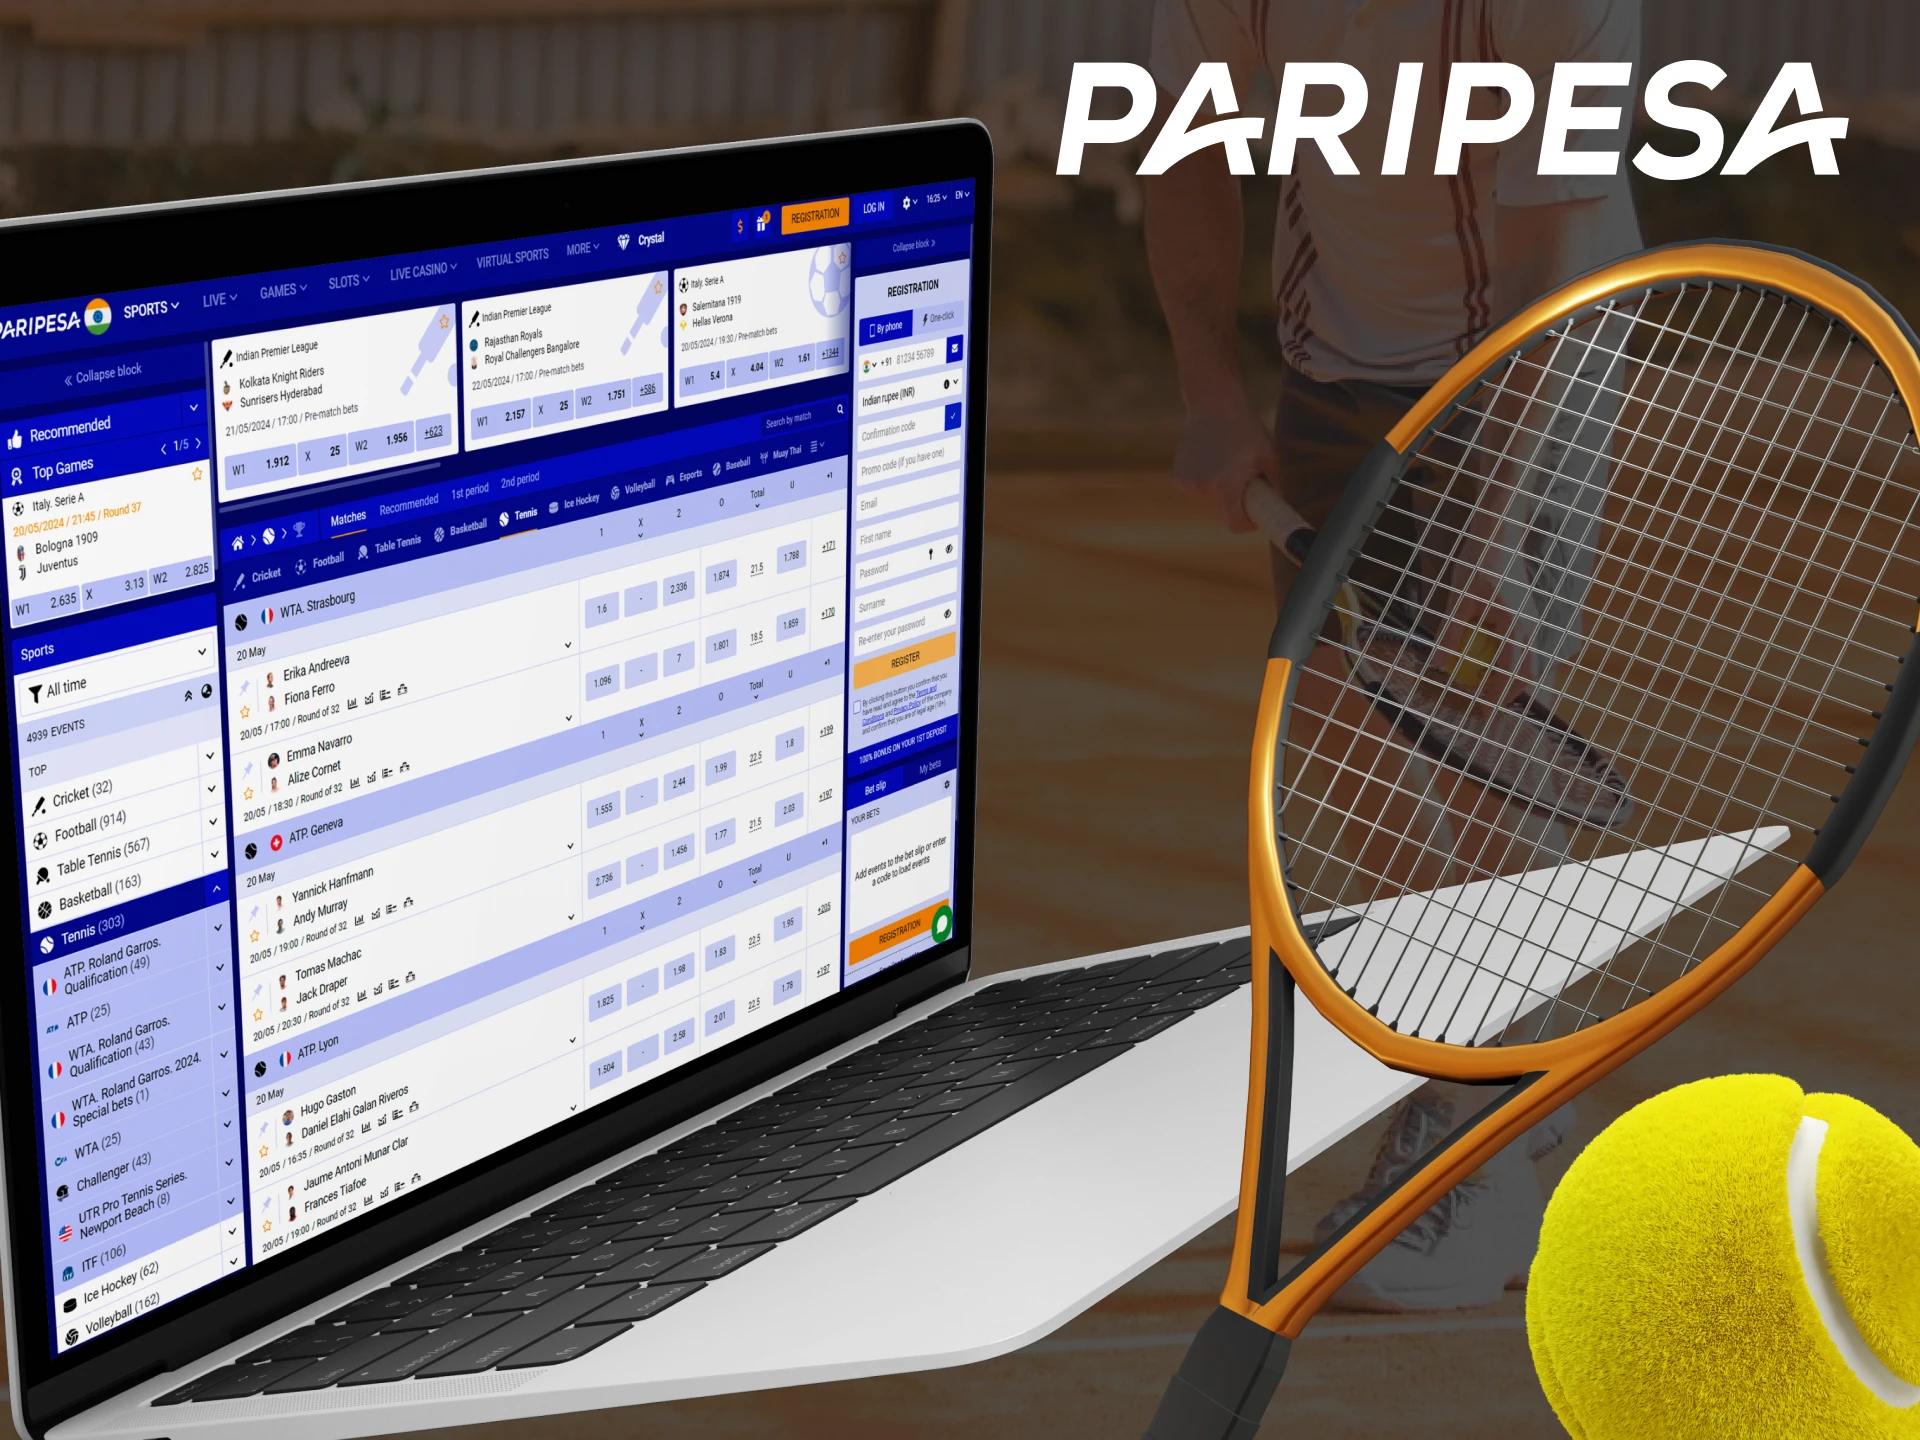 Paripesa has great tennis odds.